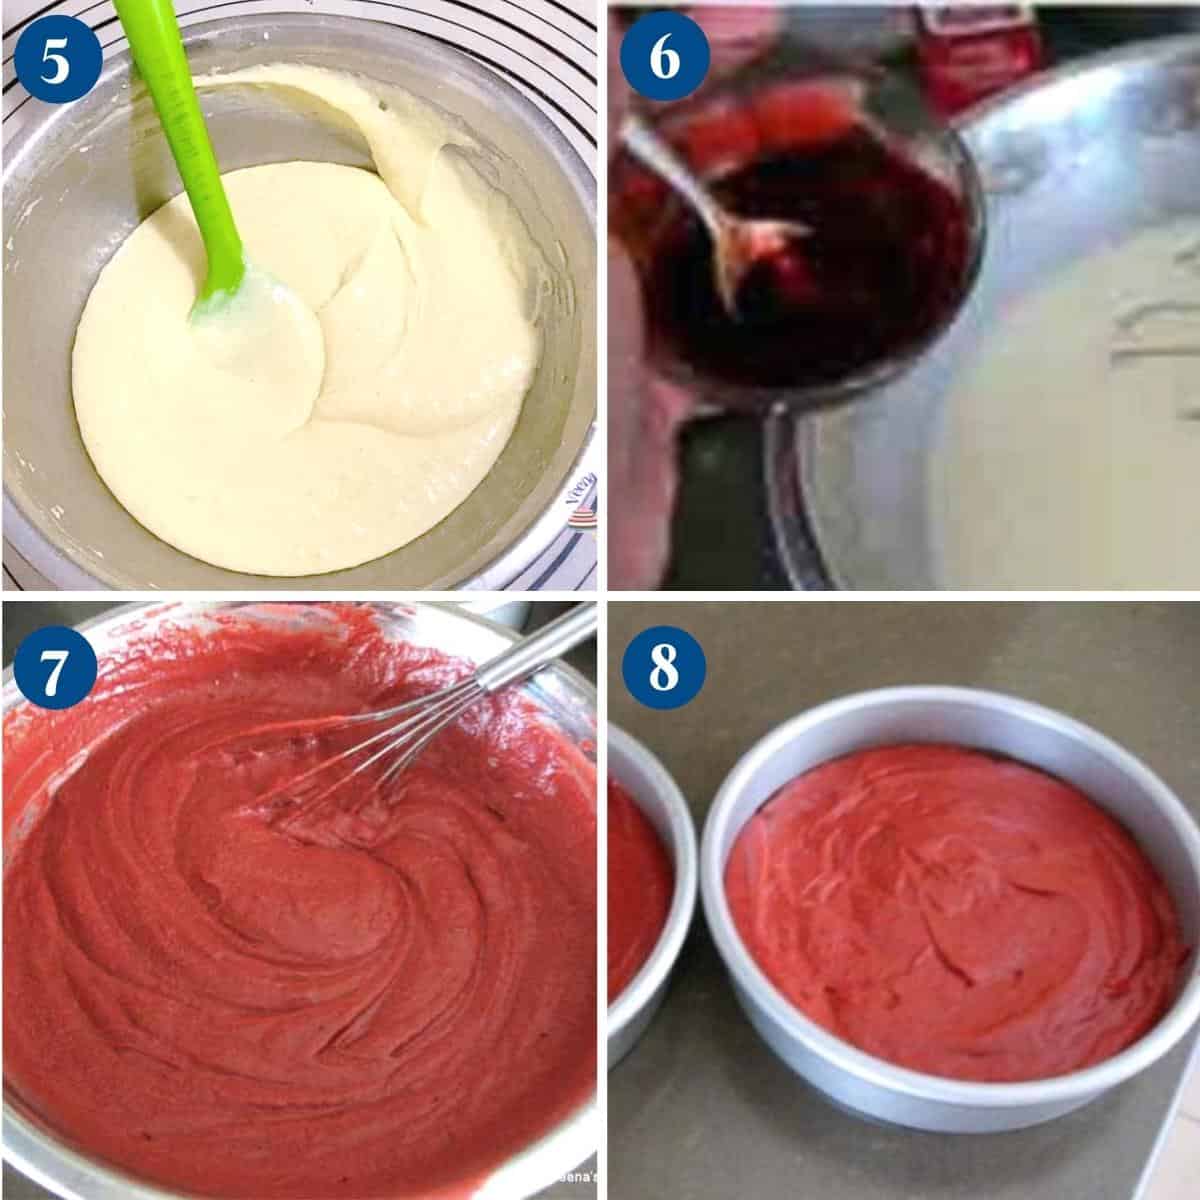 Progress pictures collage baking the red velvet cake.